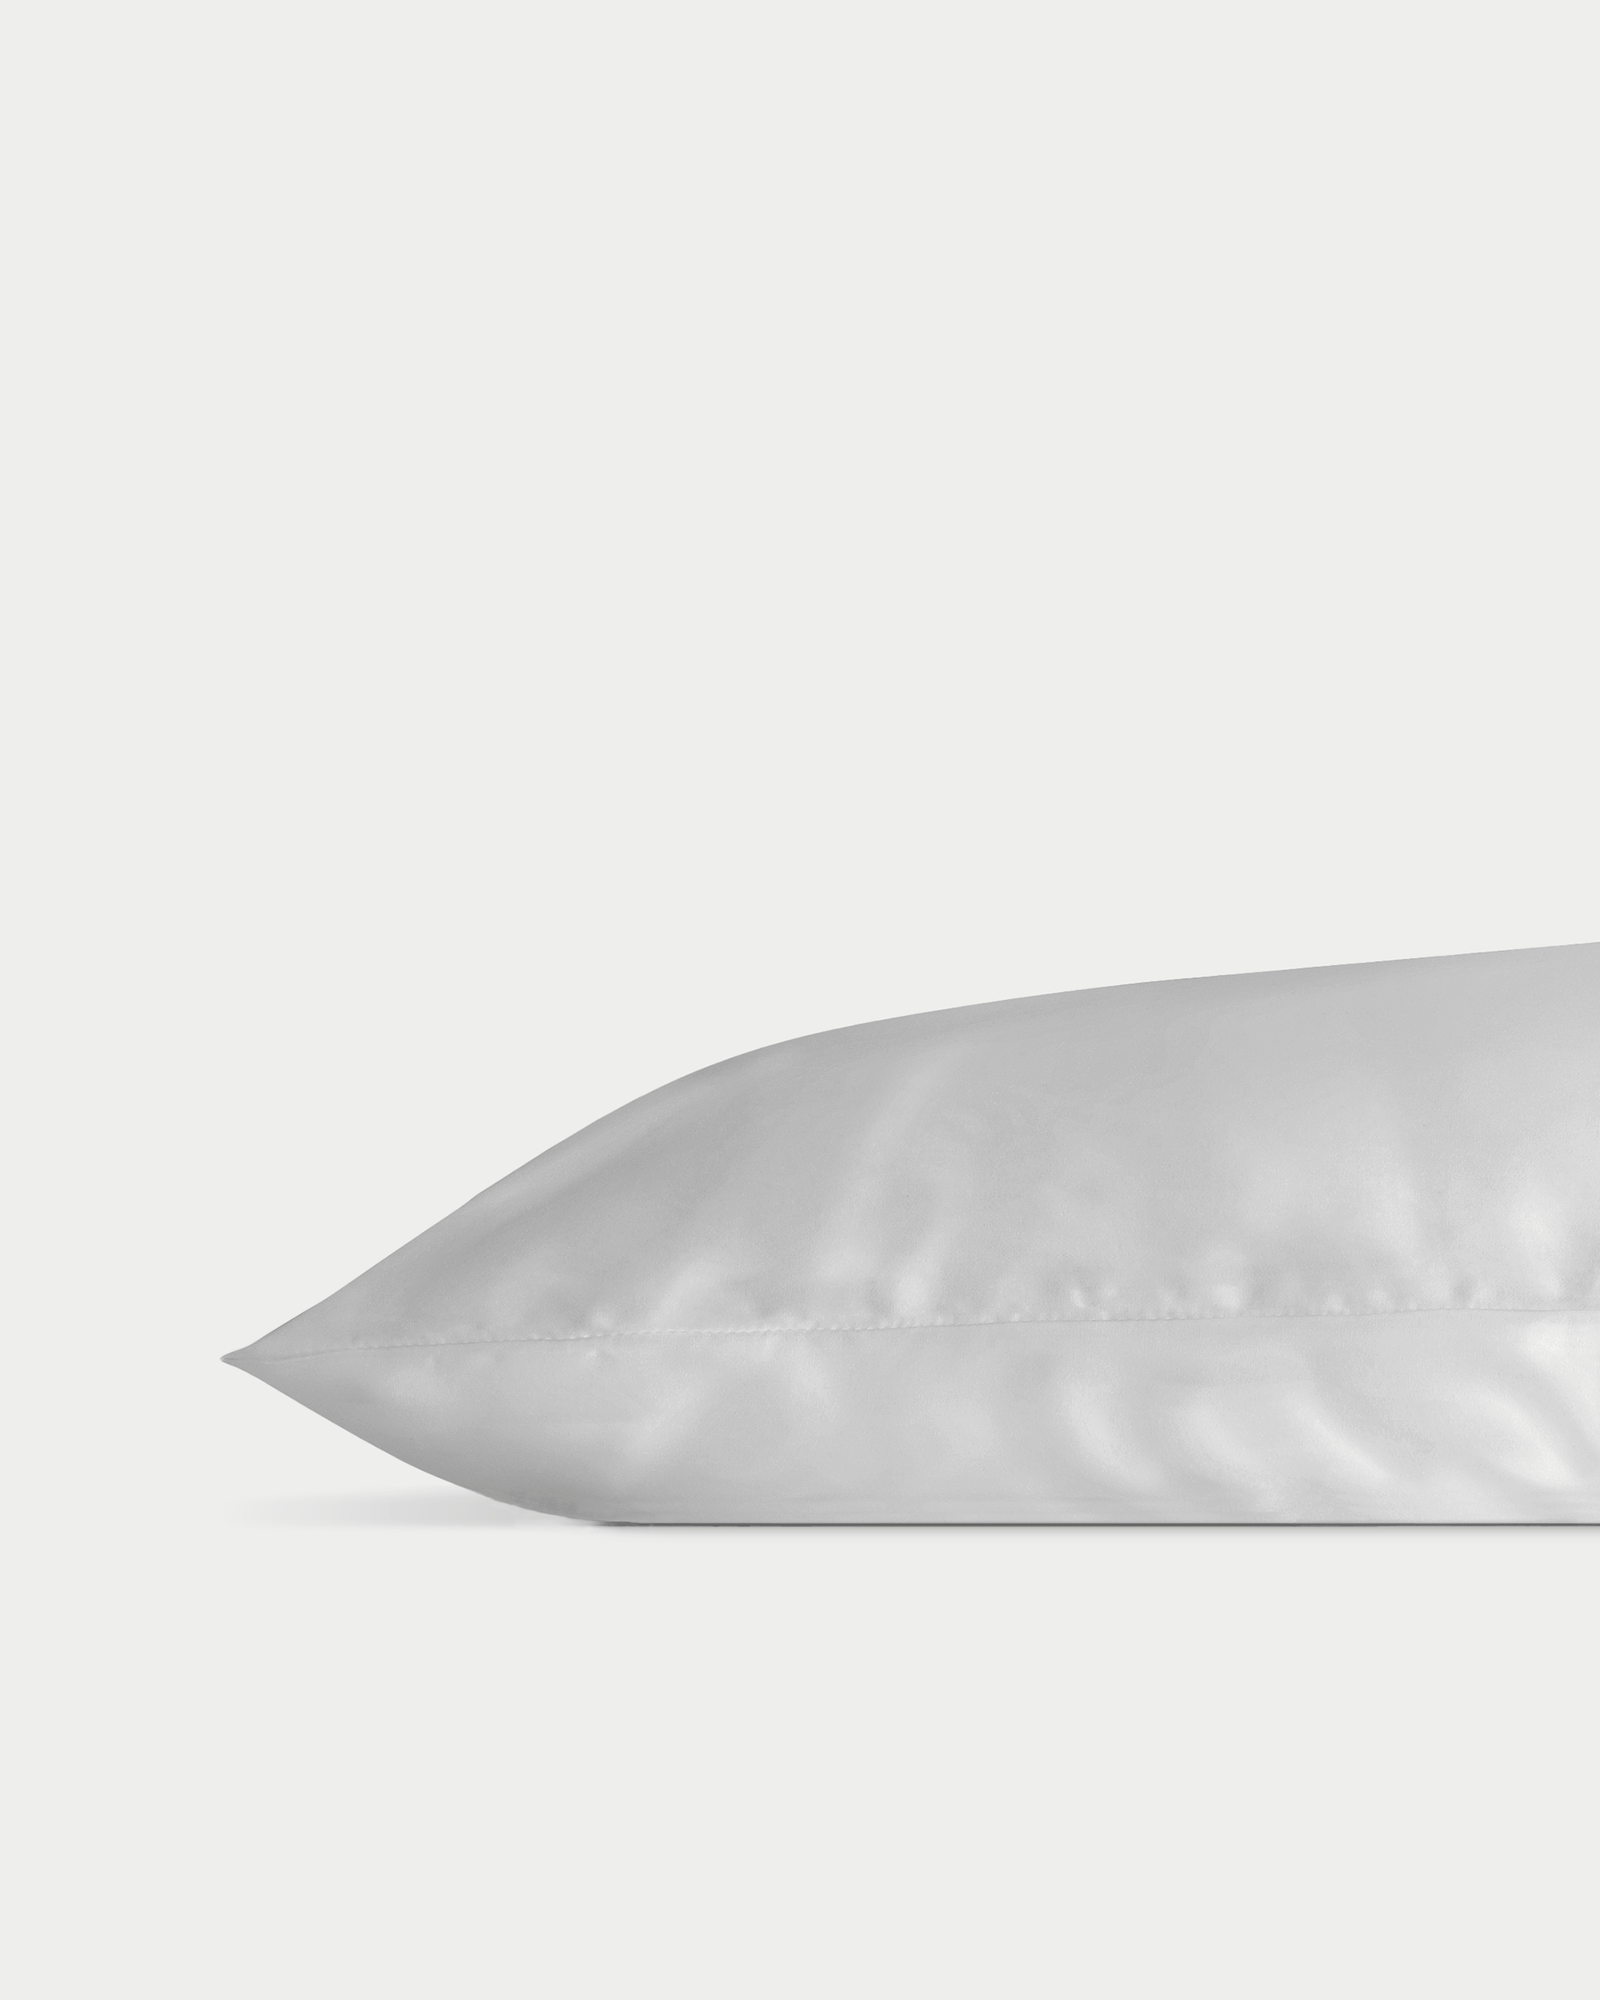 Silver silk pillowcase with white background 